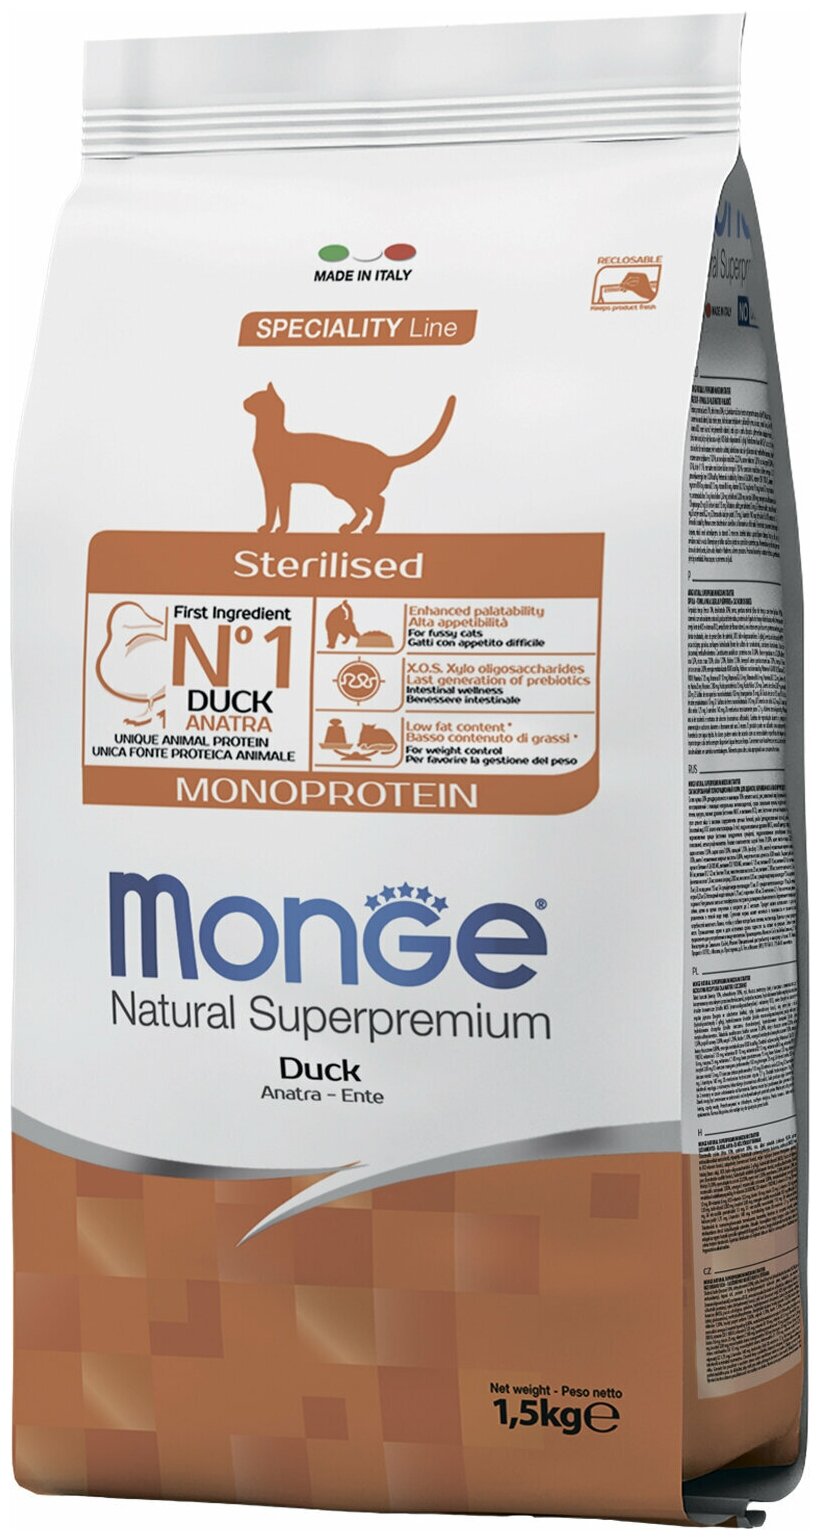 Сухой корм Monge Cat Speciality Line Monoprotein Sterilised для стерилизованных кошек, из утки 1,5 кг - фотография № 9